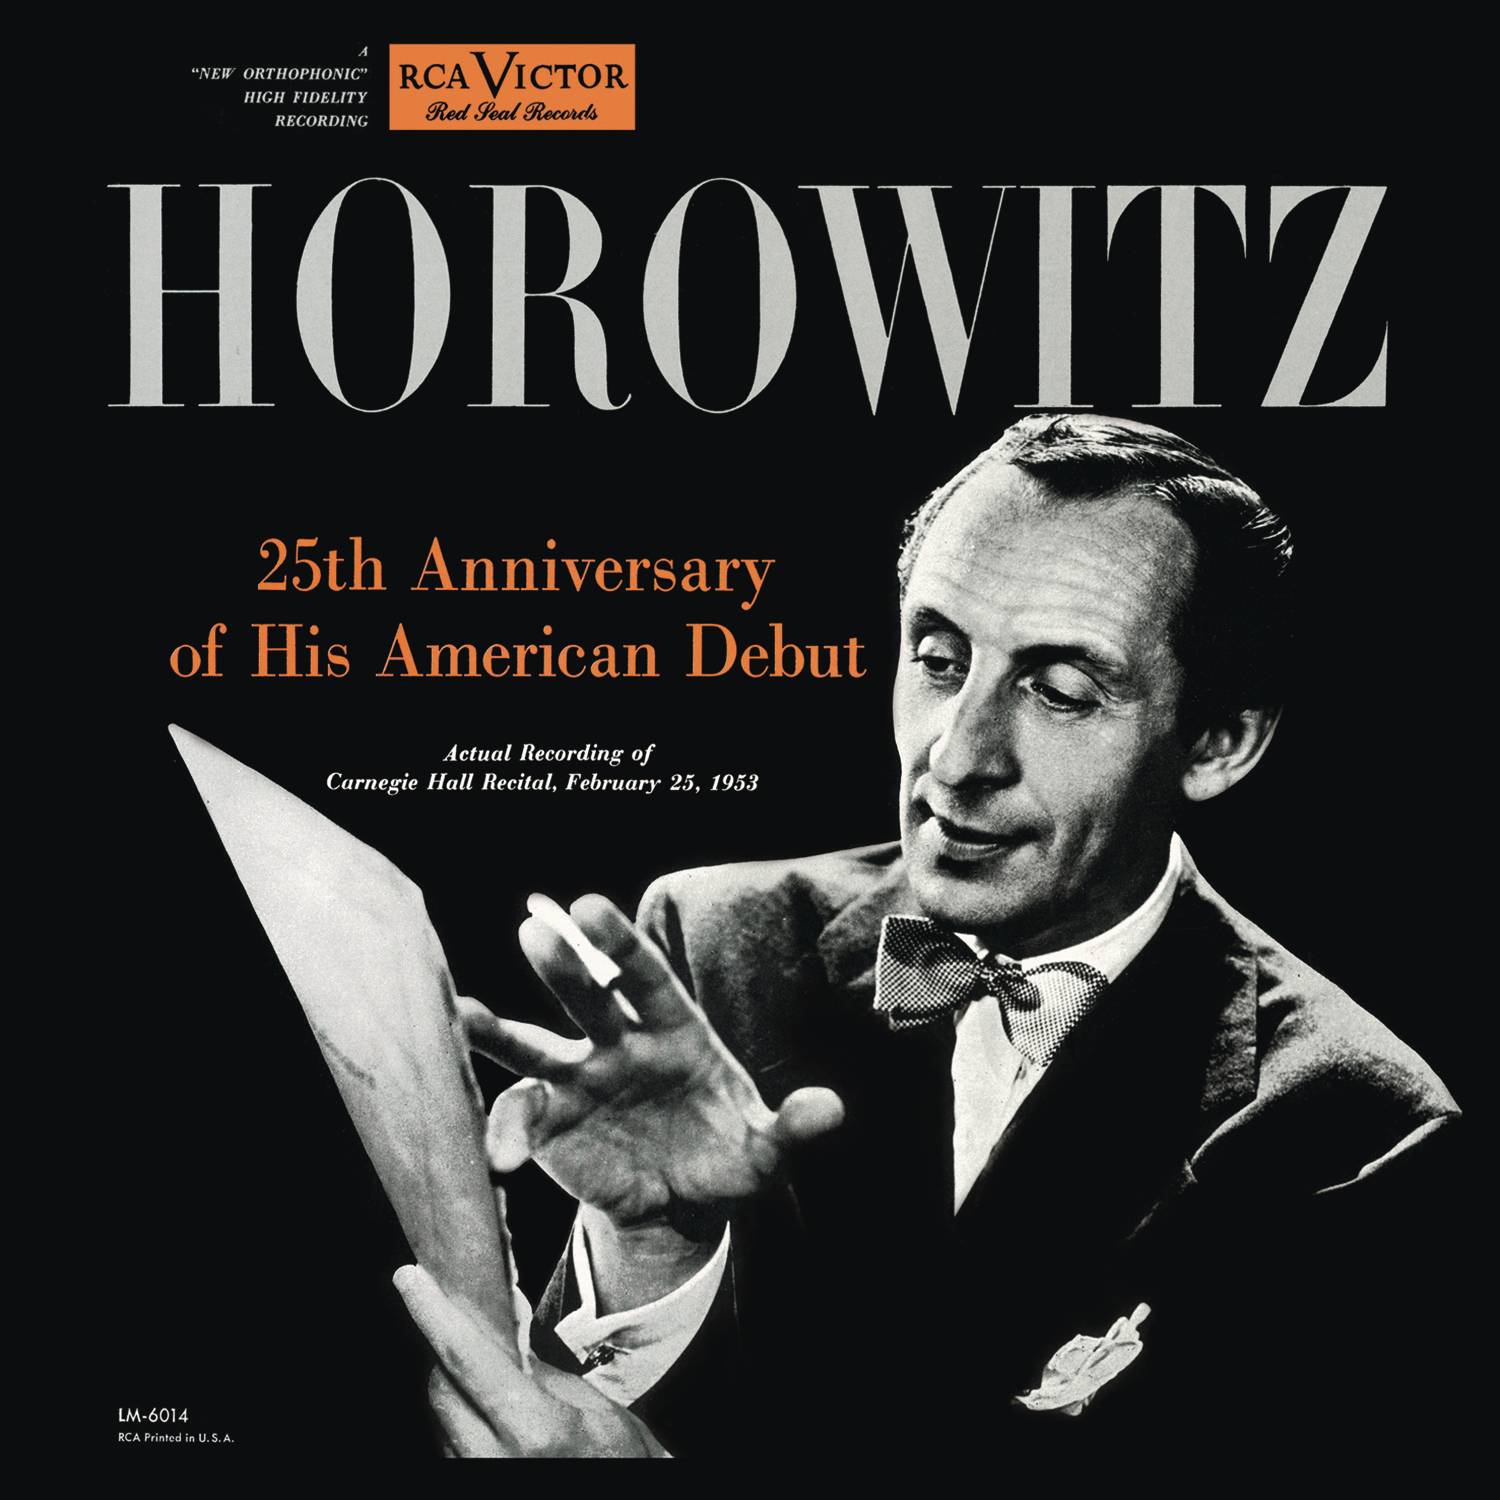 Vladimir Horowitz live at Carnegie Hall - 25th Anniversary of His American Debut, Silver Jubilee Recital (February 25, 1953)